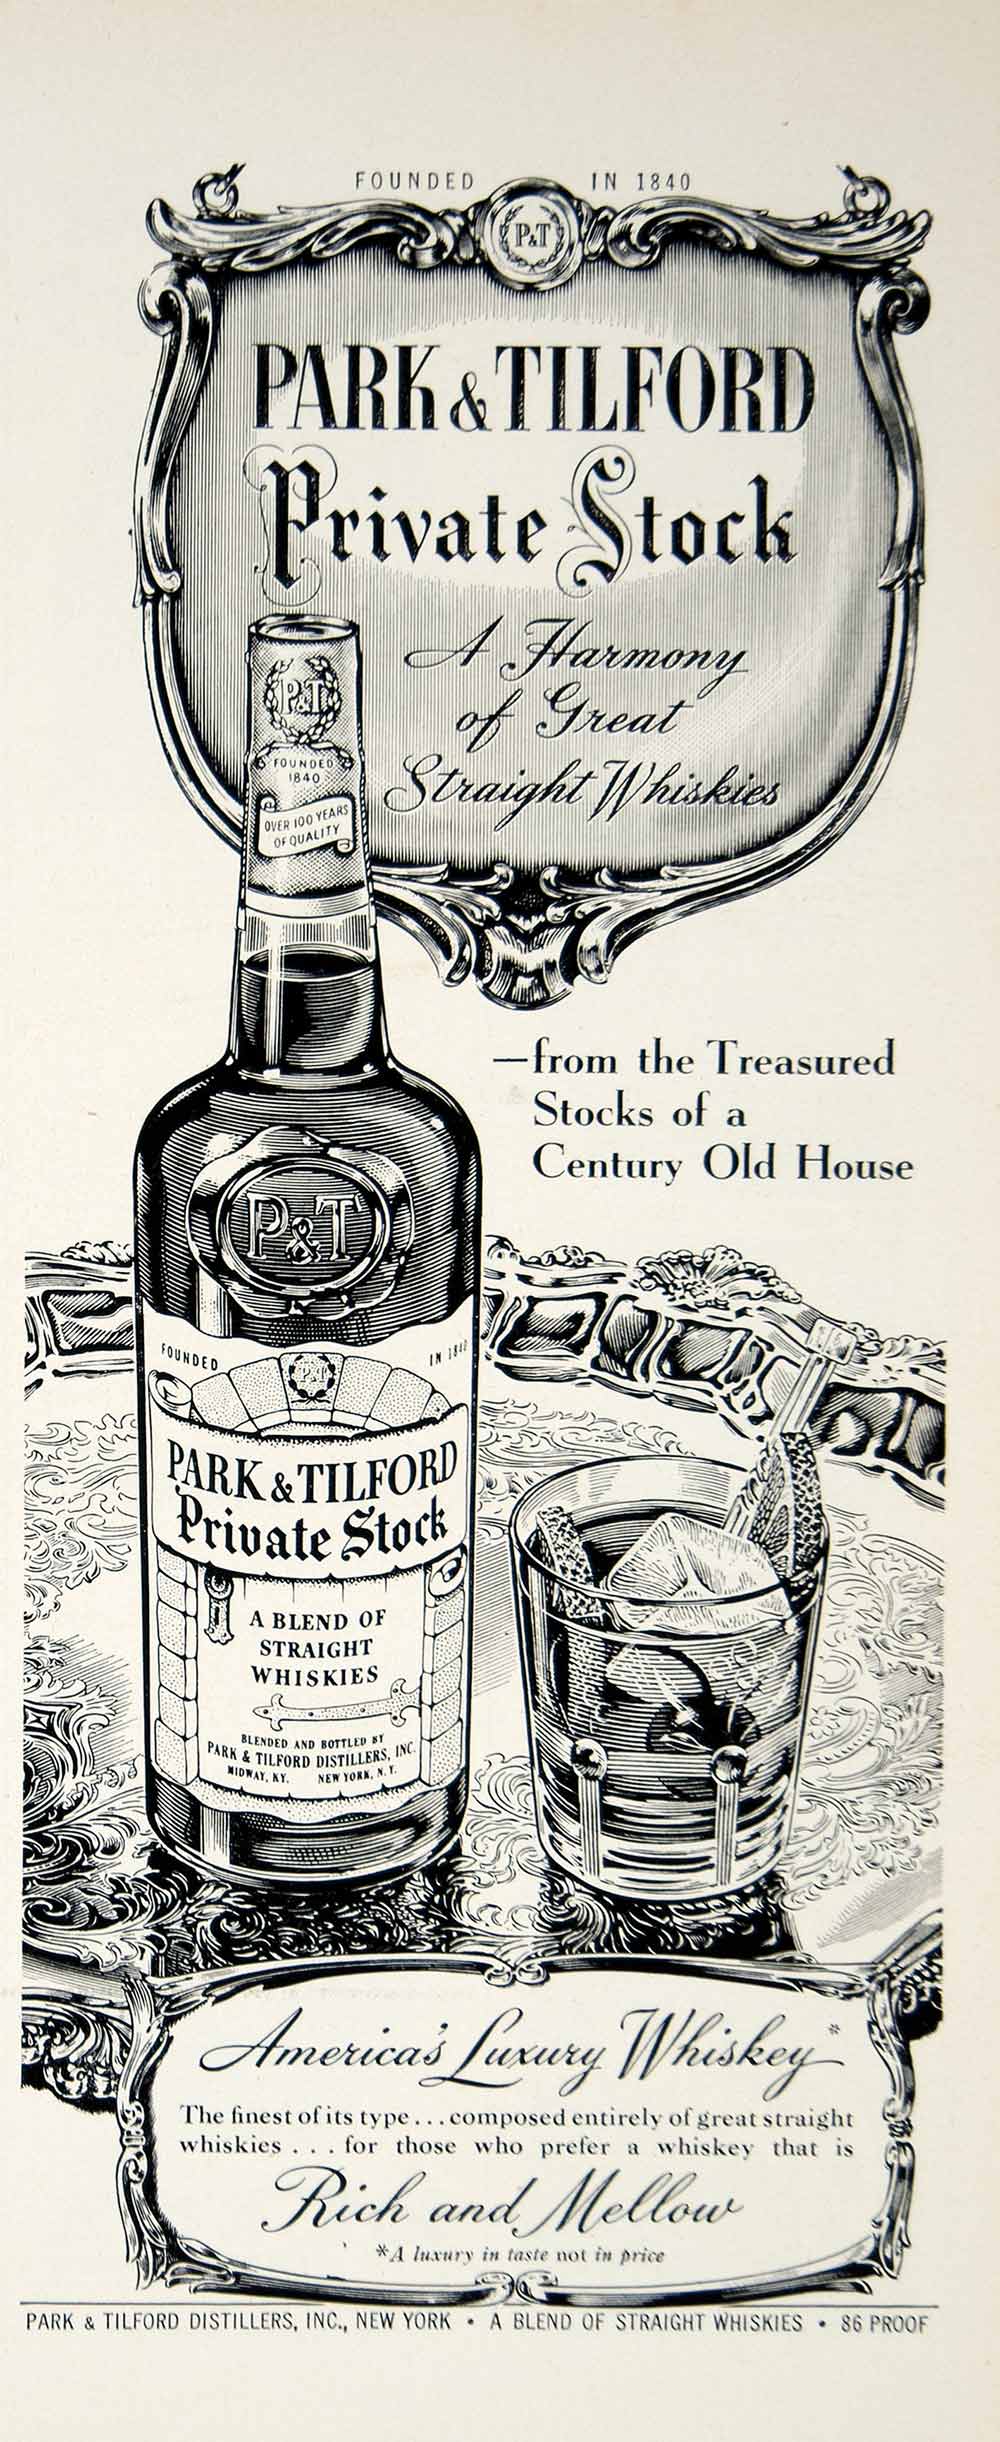 1950 Ad YFT6 Park & Tilford Private Stock Whisky Liquor Alcohol Beverage YFT6